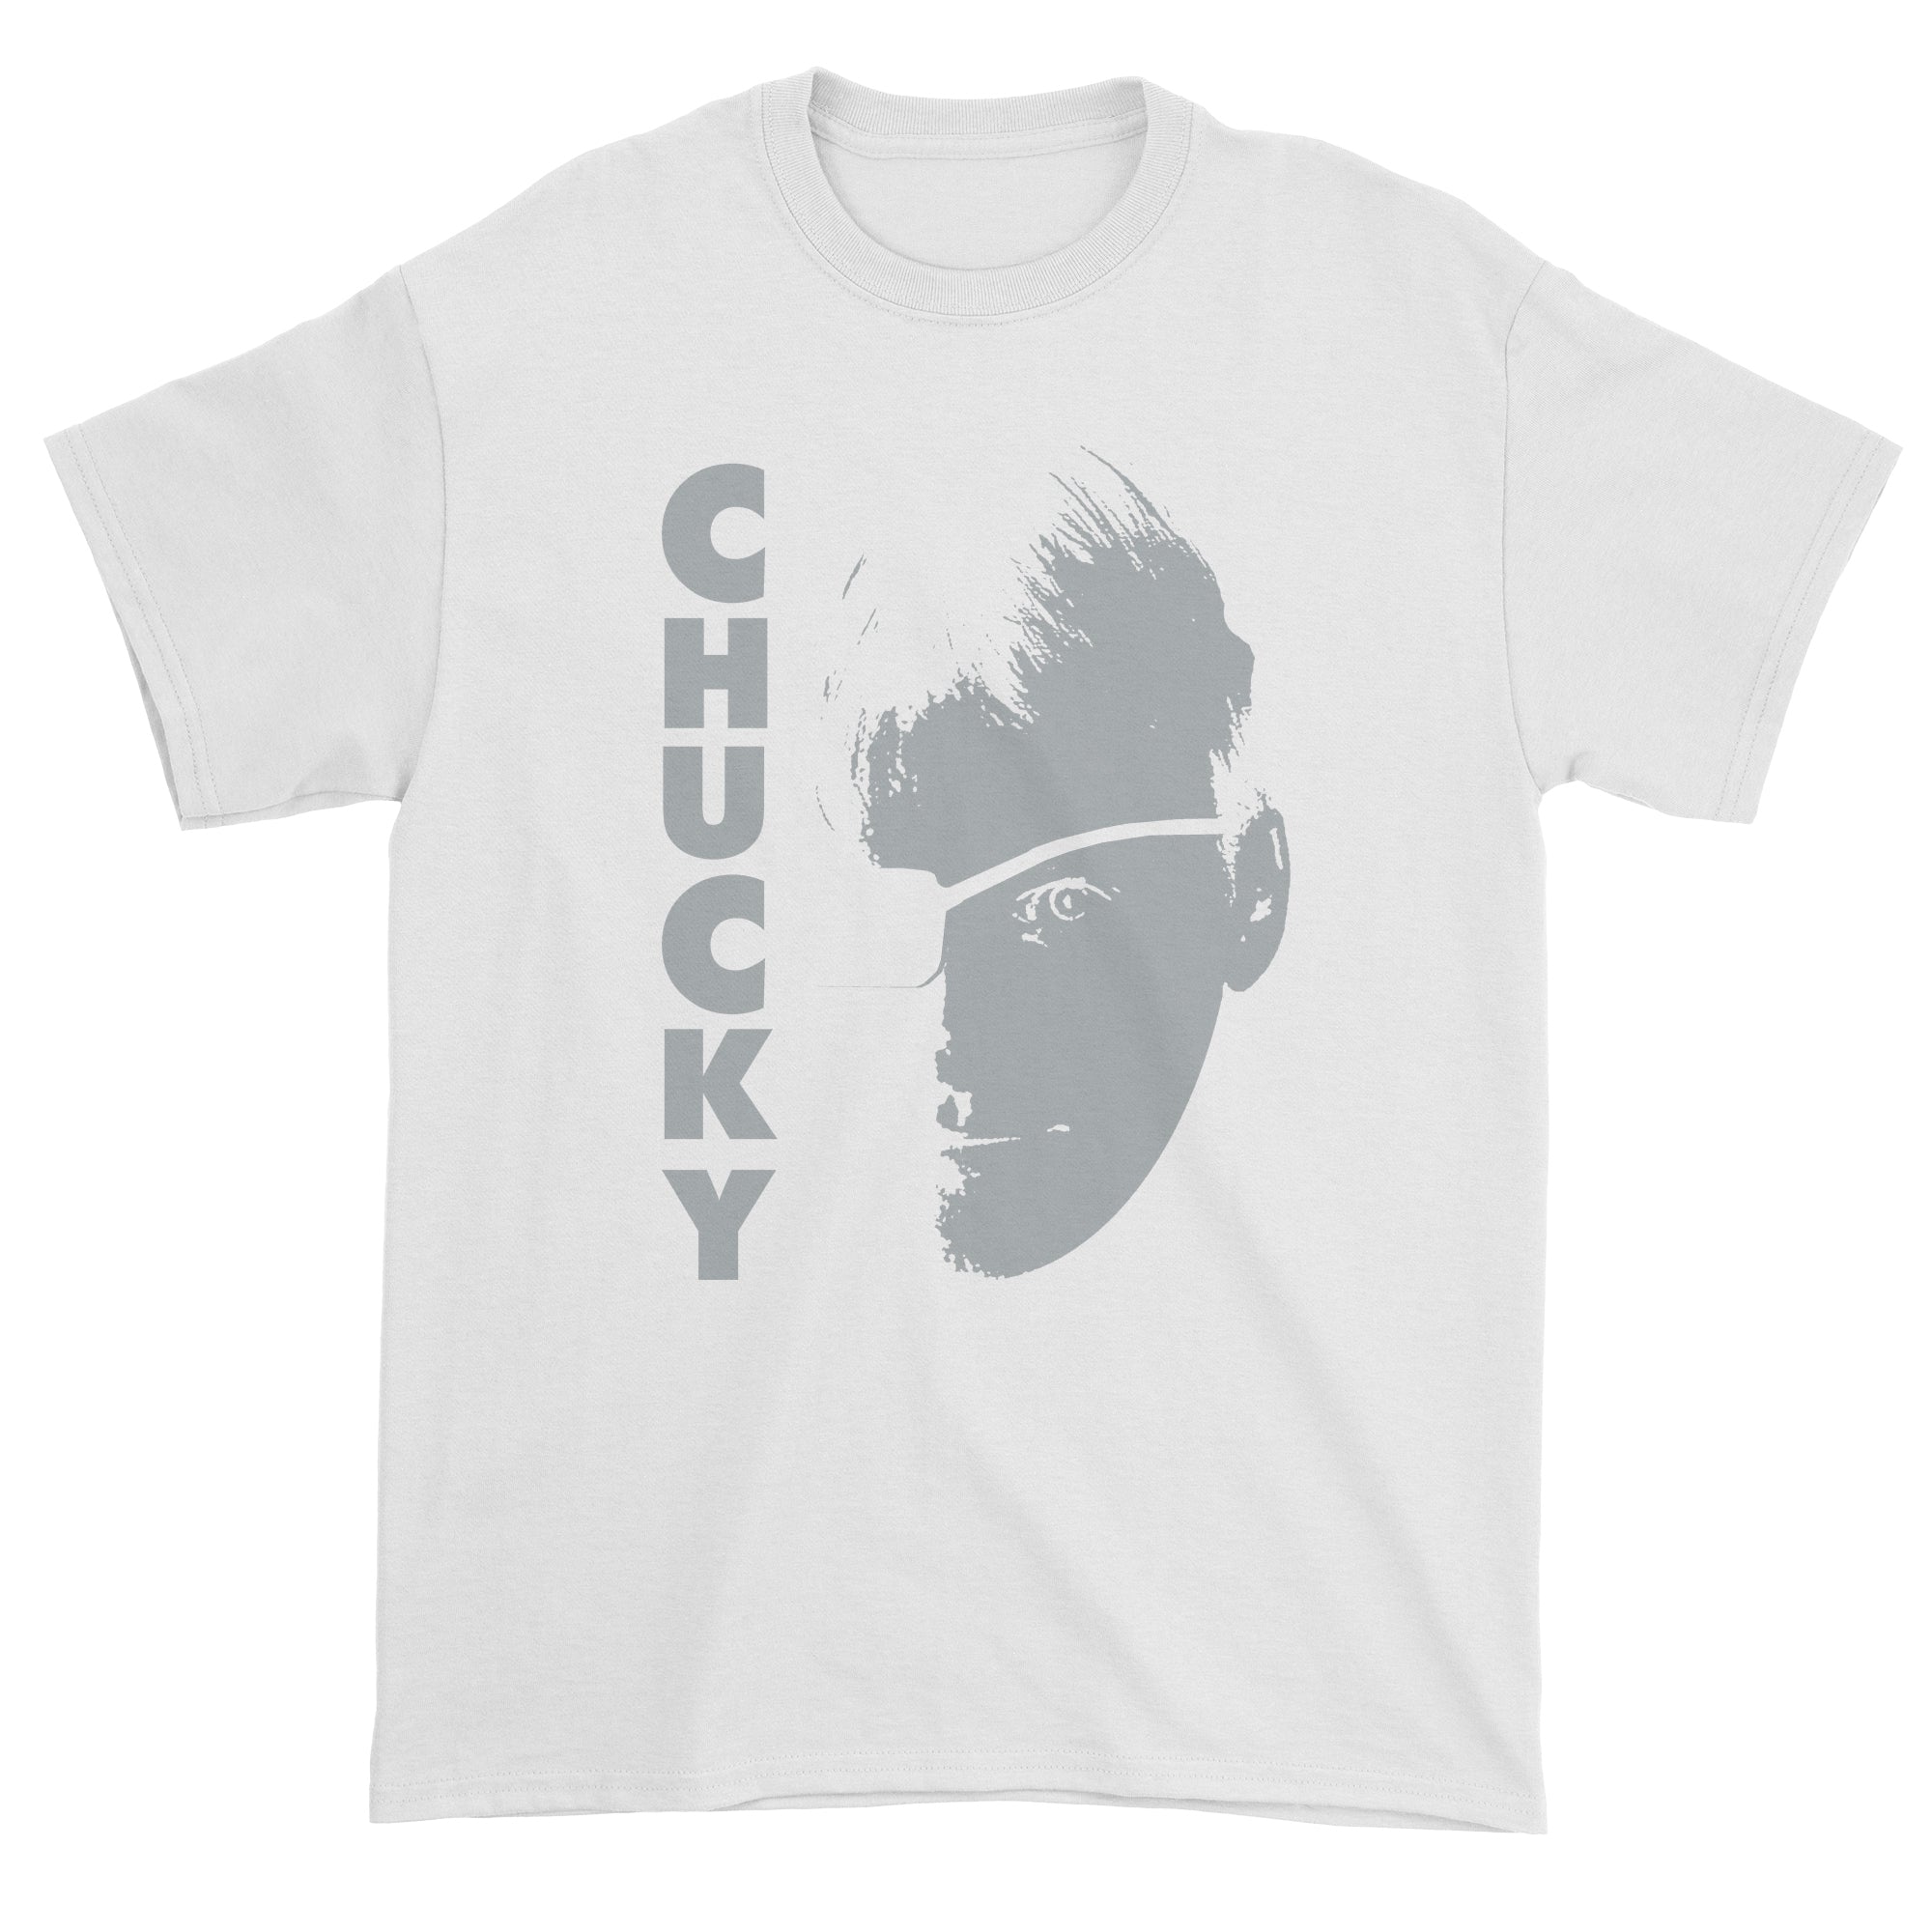 Chucky is Back in Oakland Men's T-Shirt